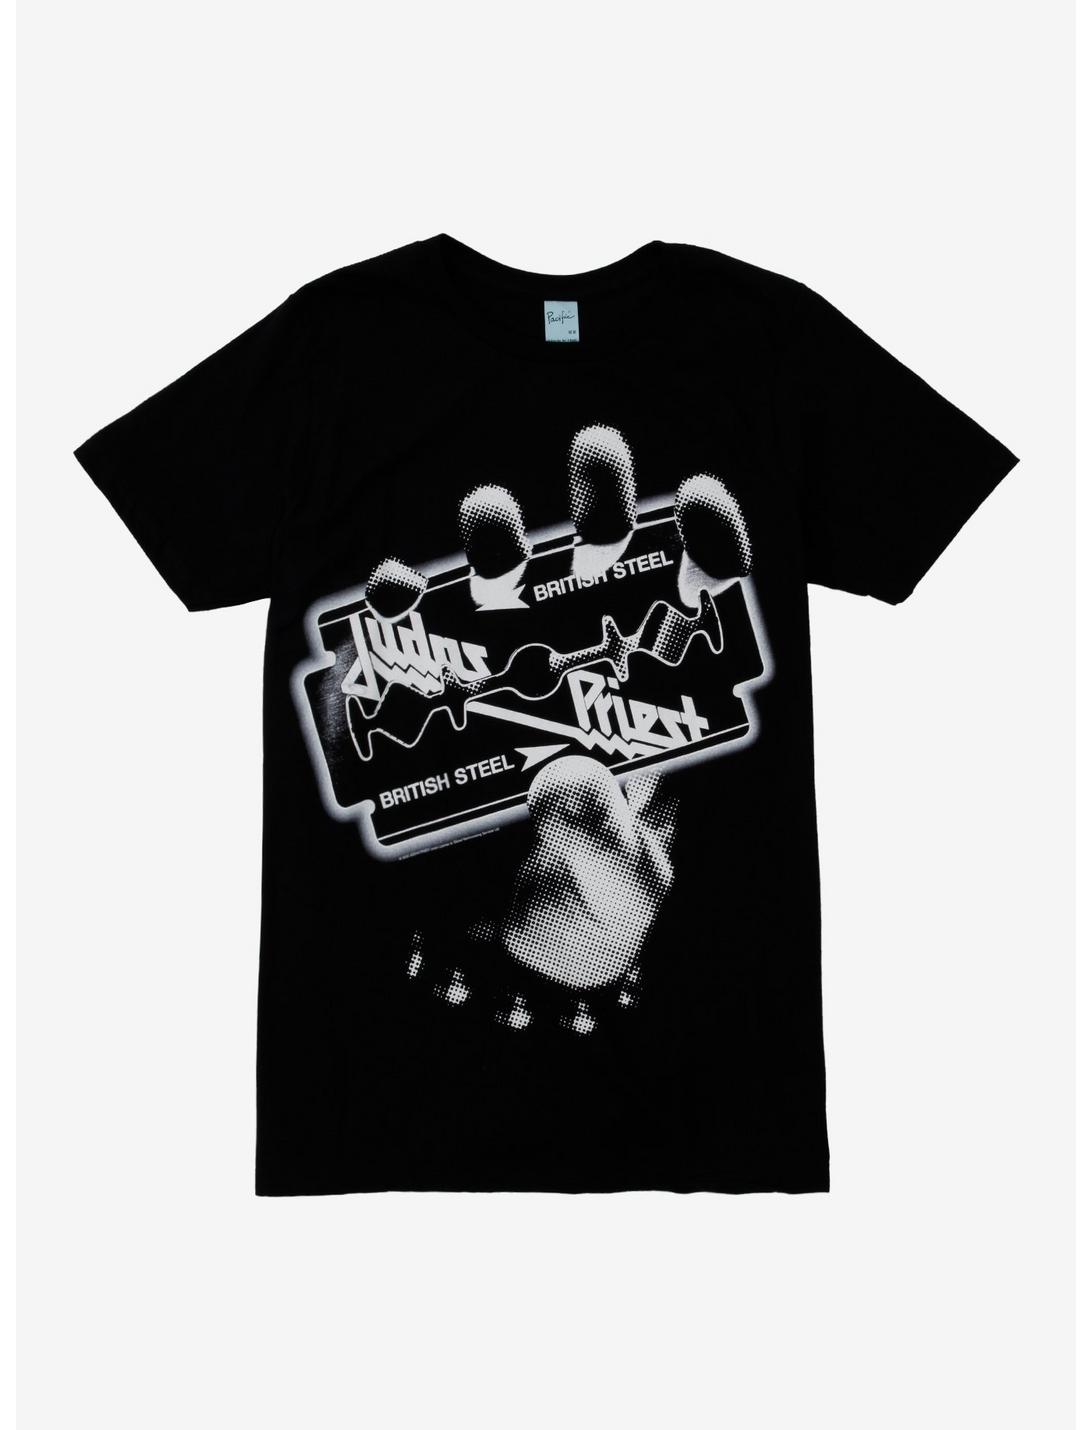 Judas Priest British Steel T-Shirt, BLACK, hi-res